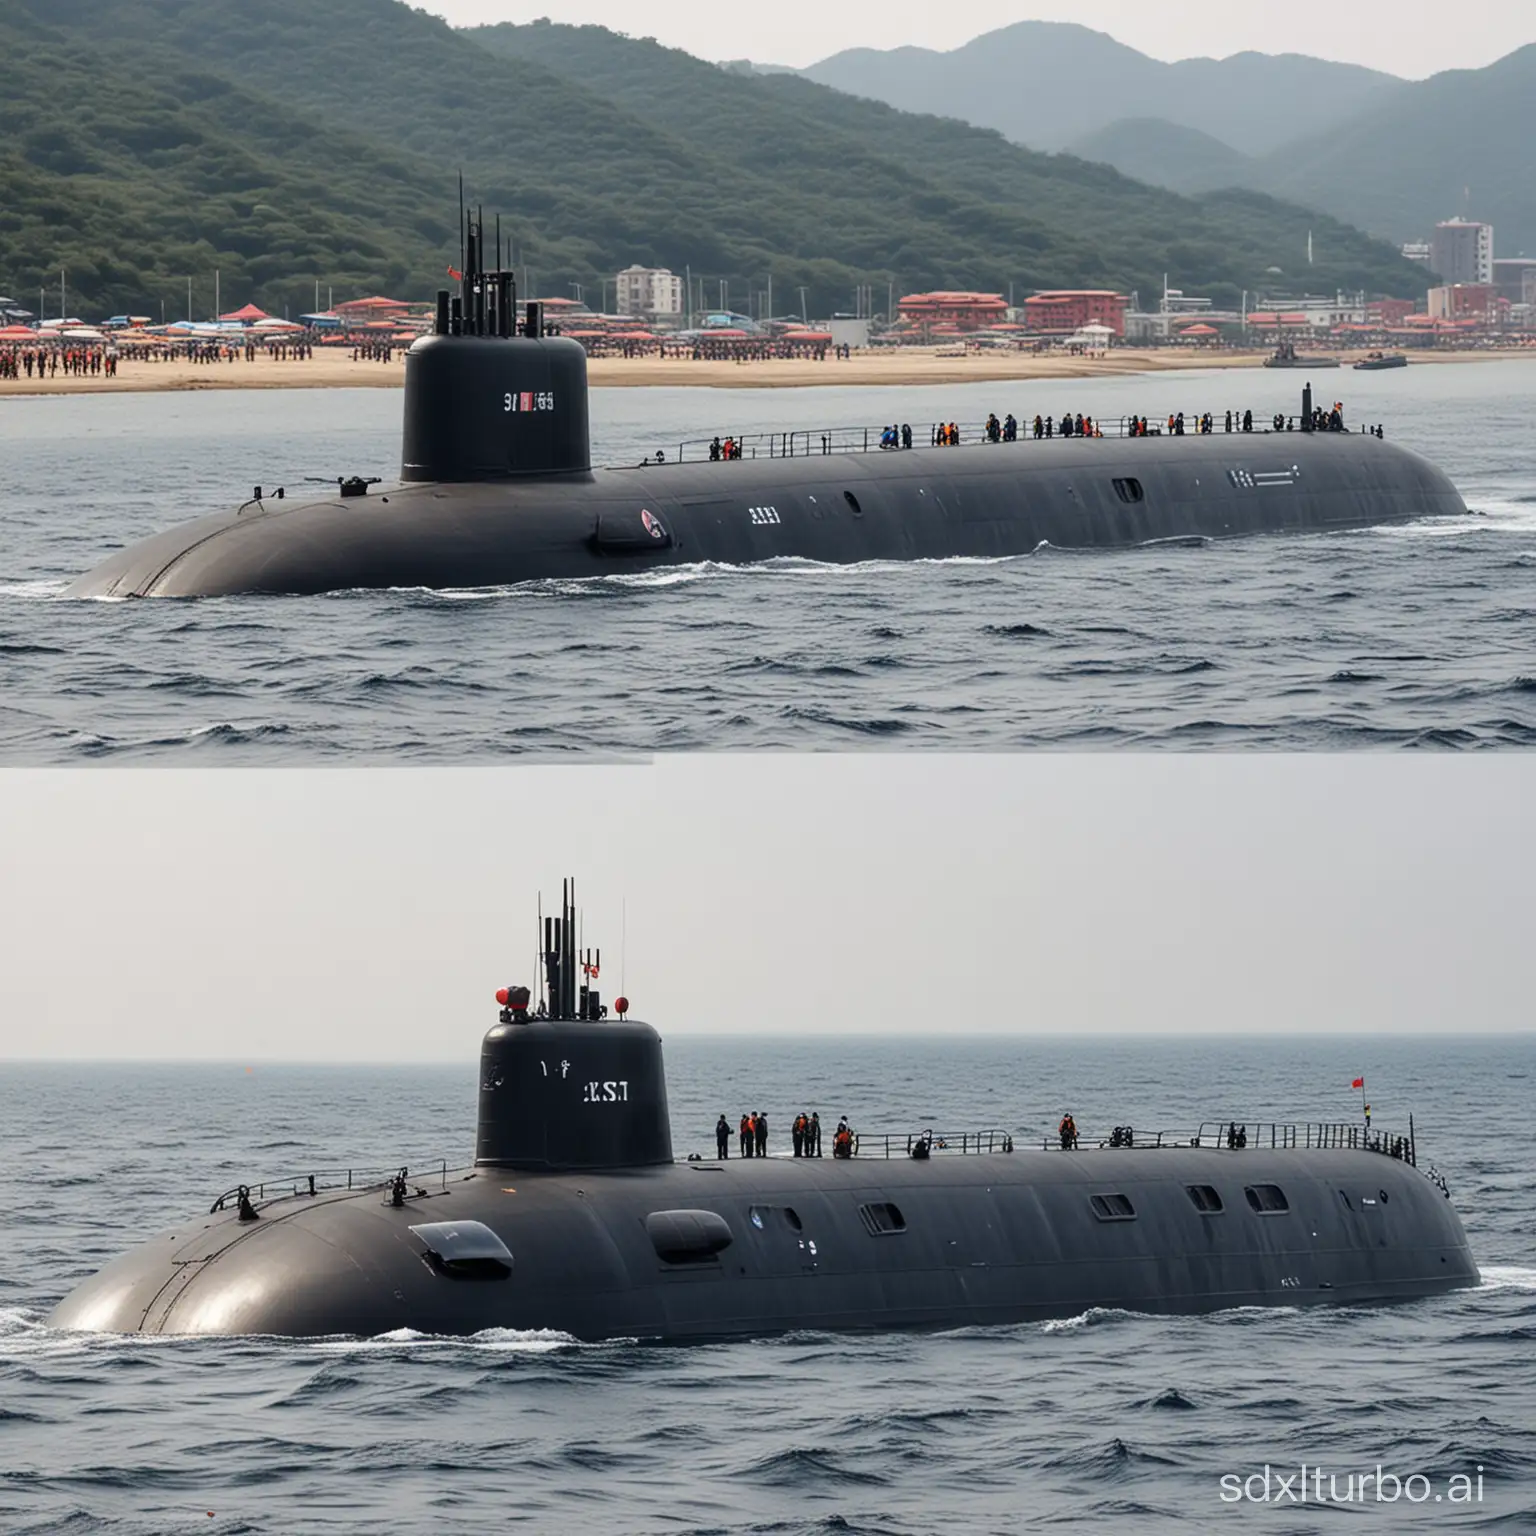 Fuwentao and Jiaolong submarine